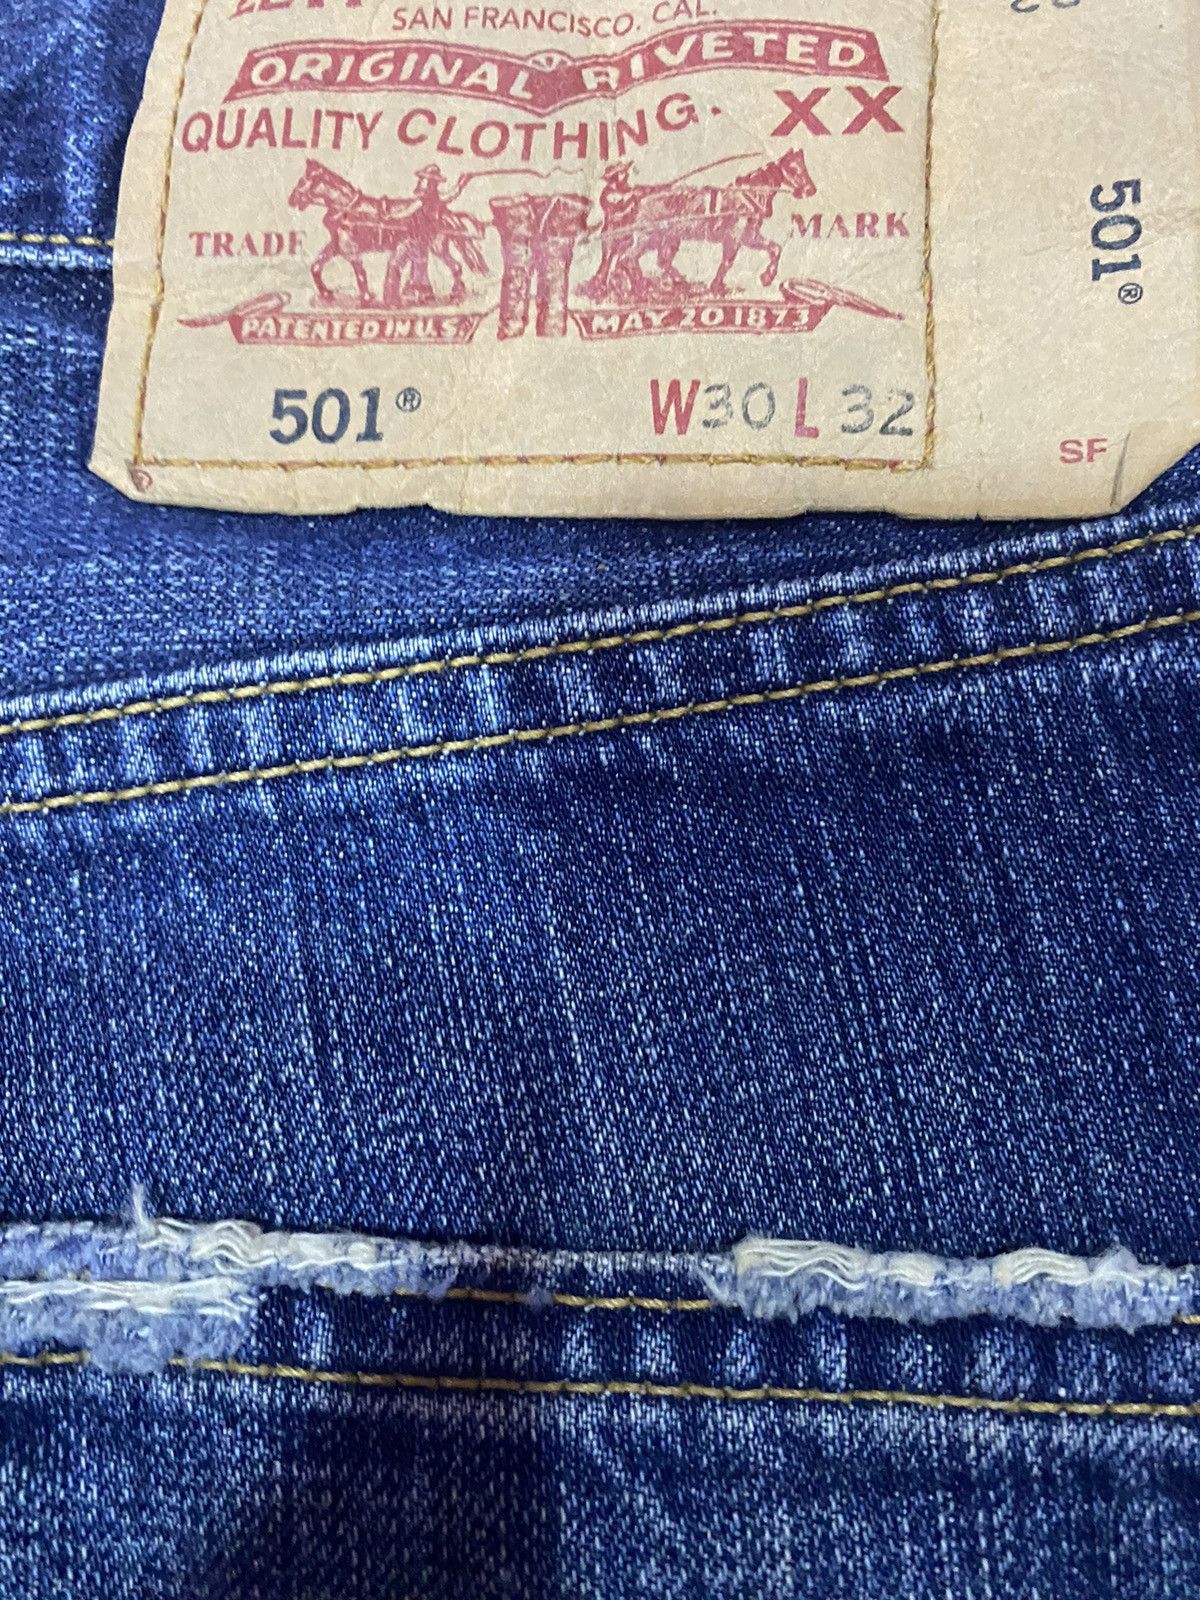 Levi’s San Francisco 501 Denim Jeans - 8